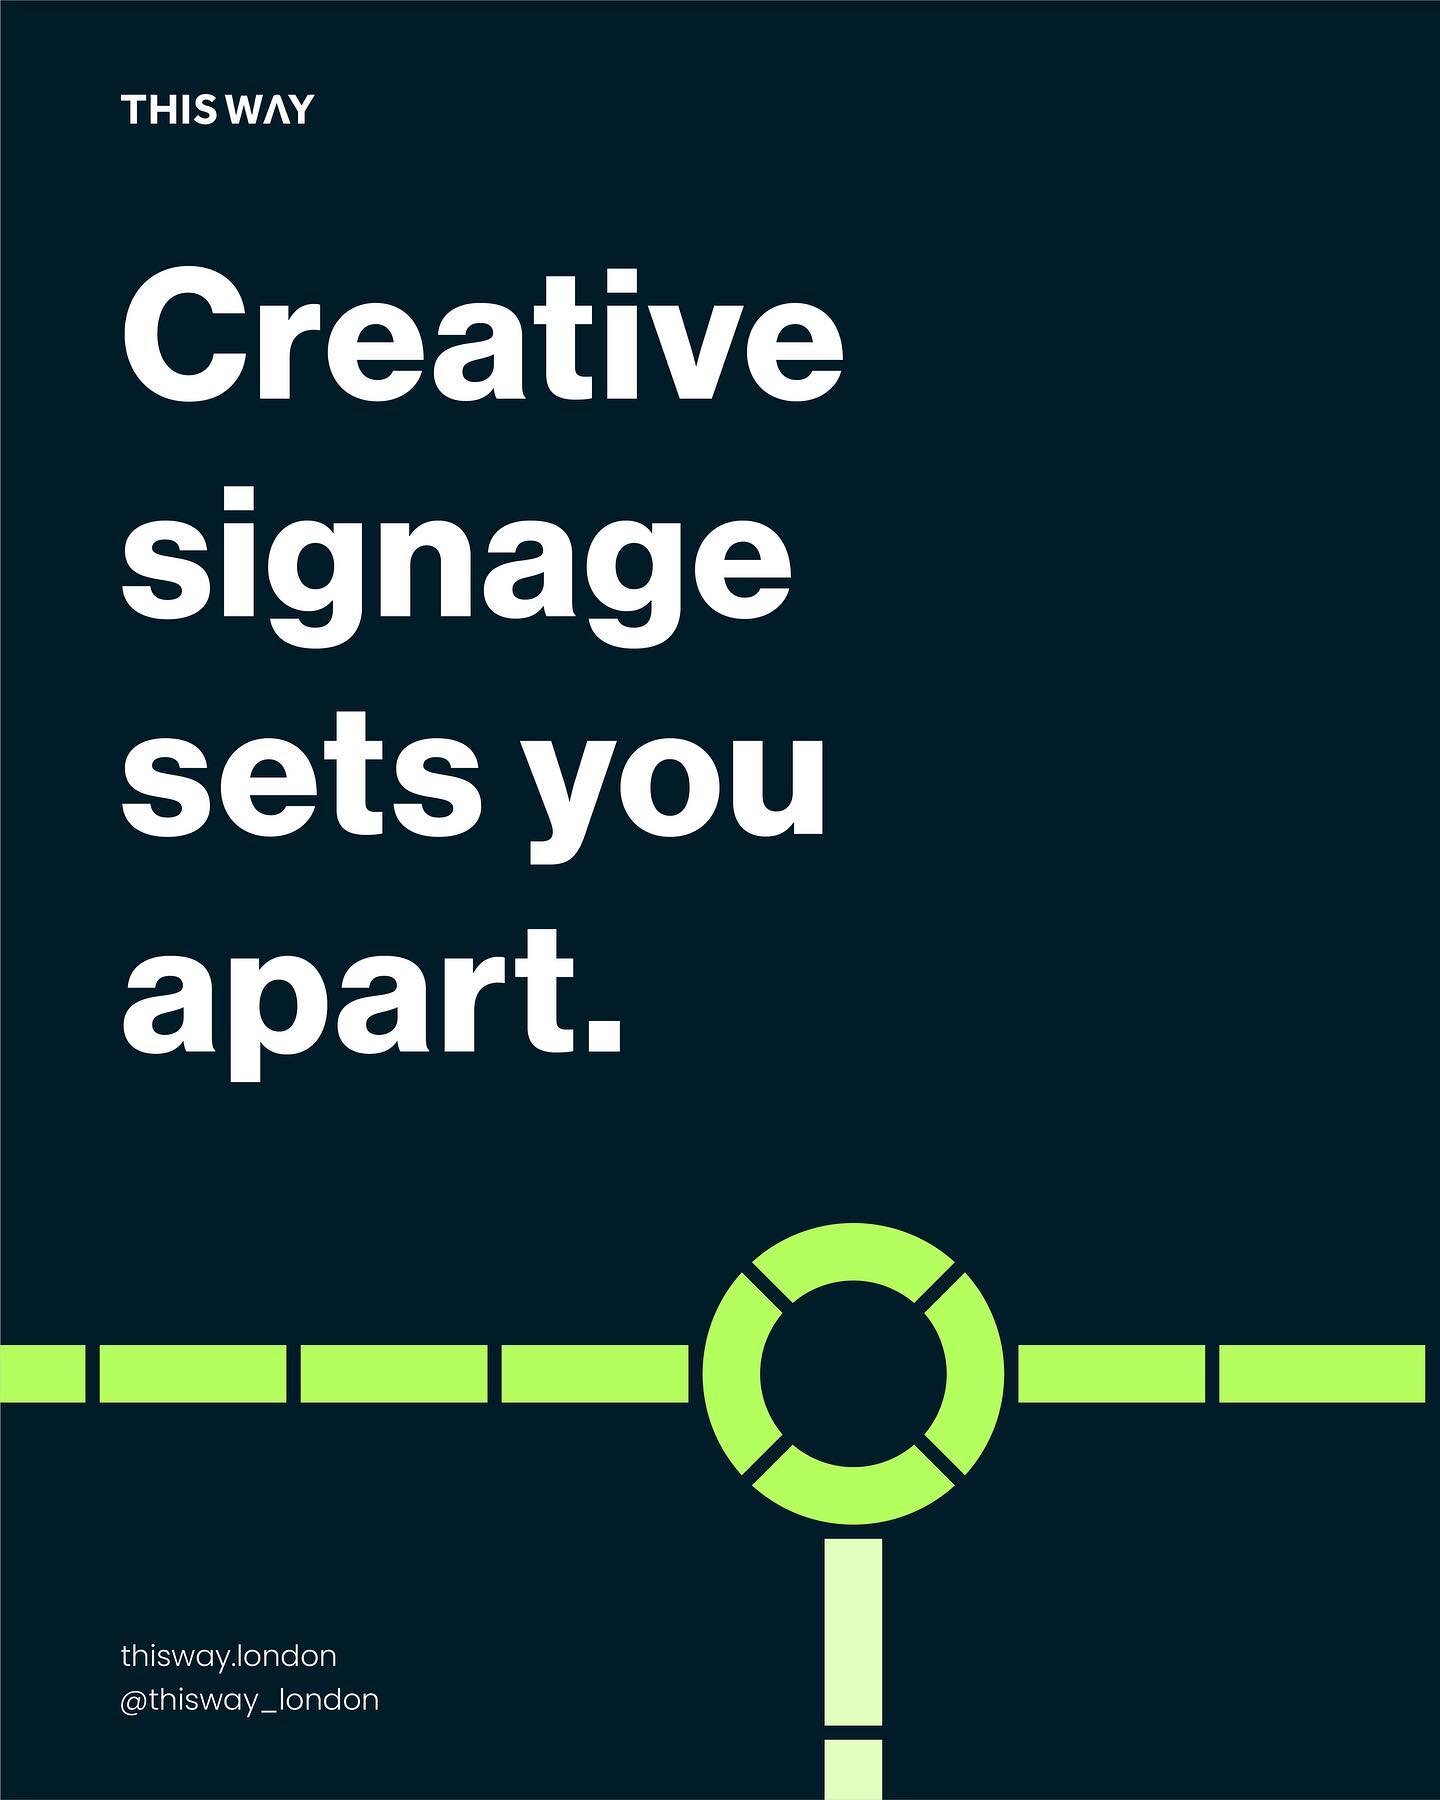 Creative signage sets you apart.

#thisway #wayfinding #signage #design #creative #architecture #london #branding